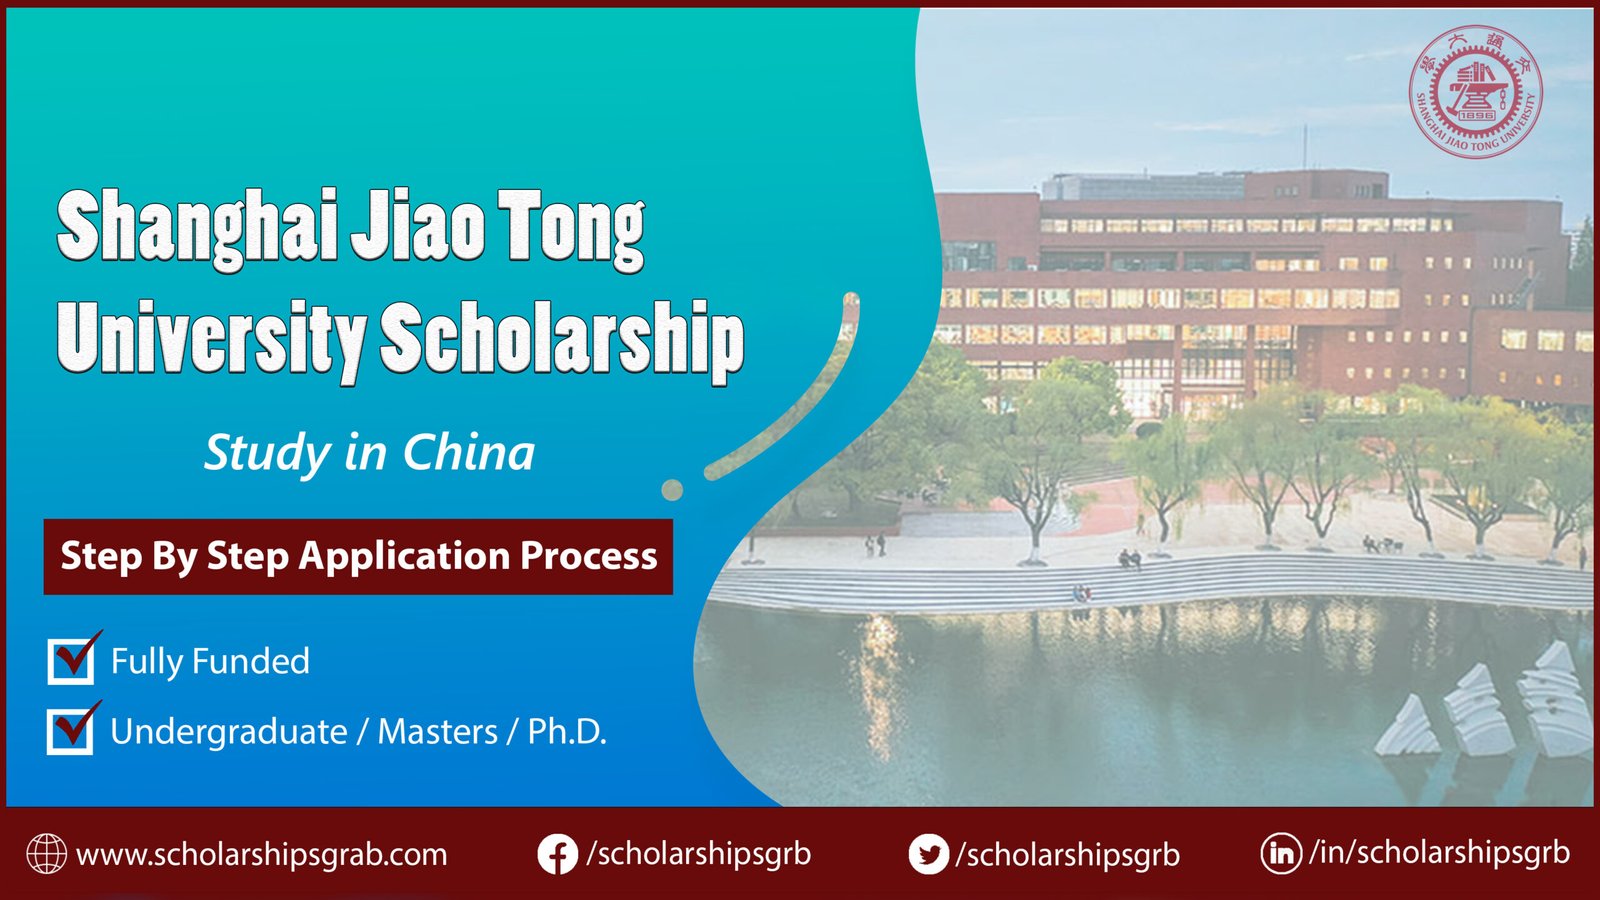 Shanghai Jiao Tong University Scholarship